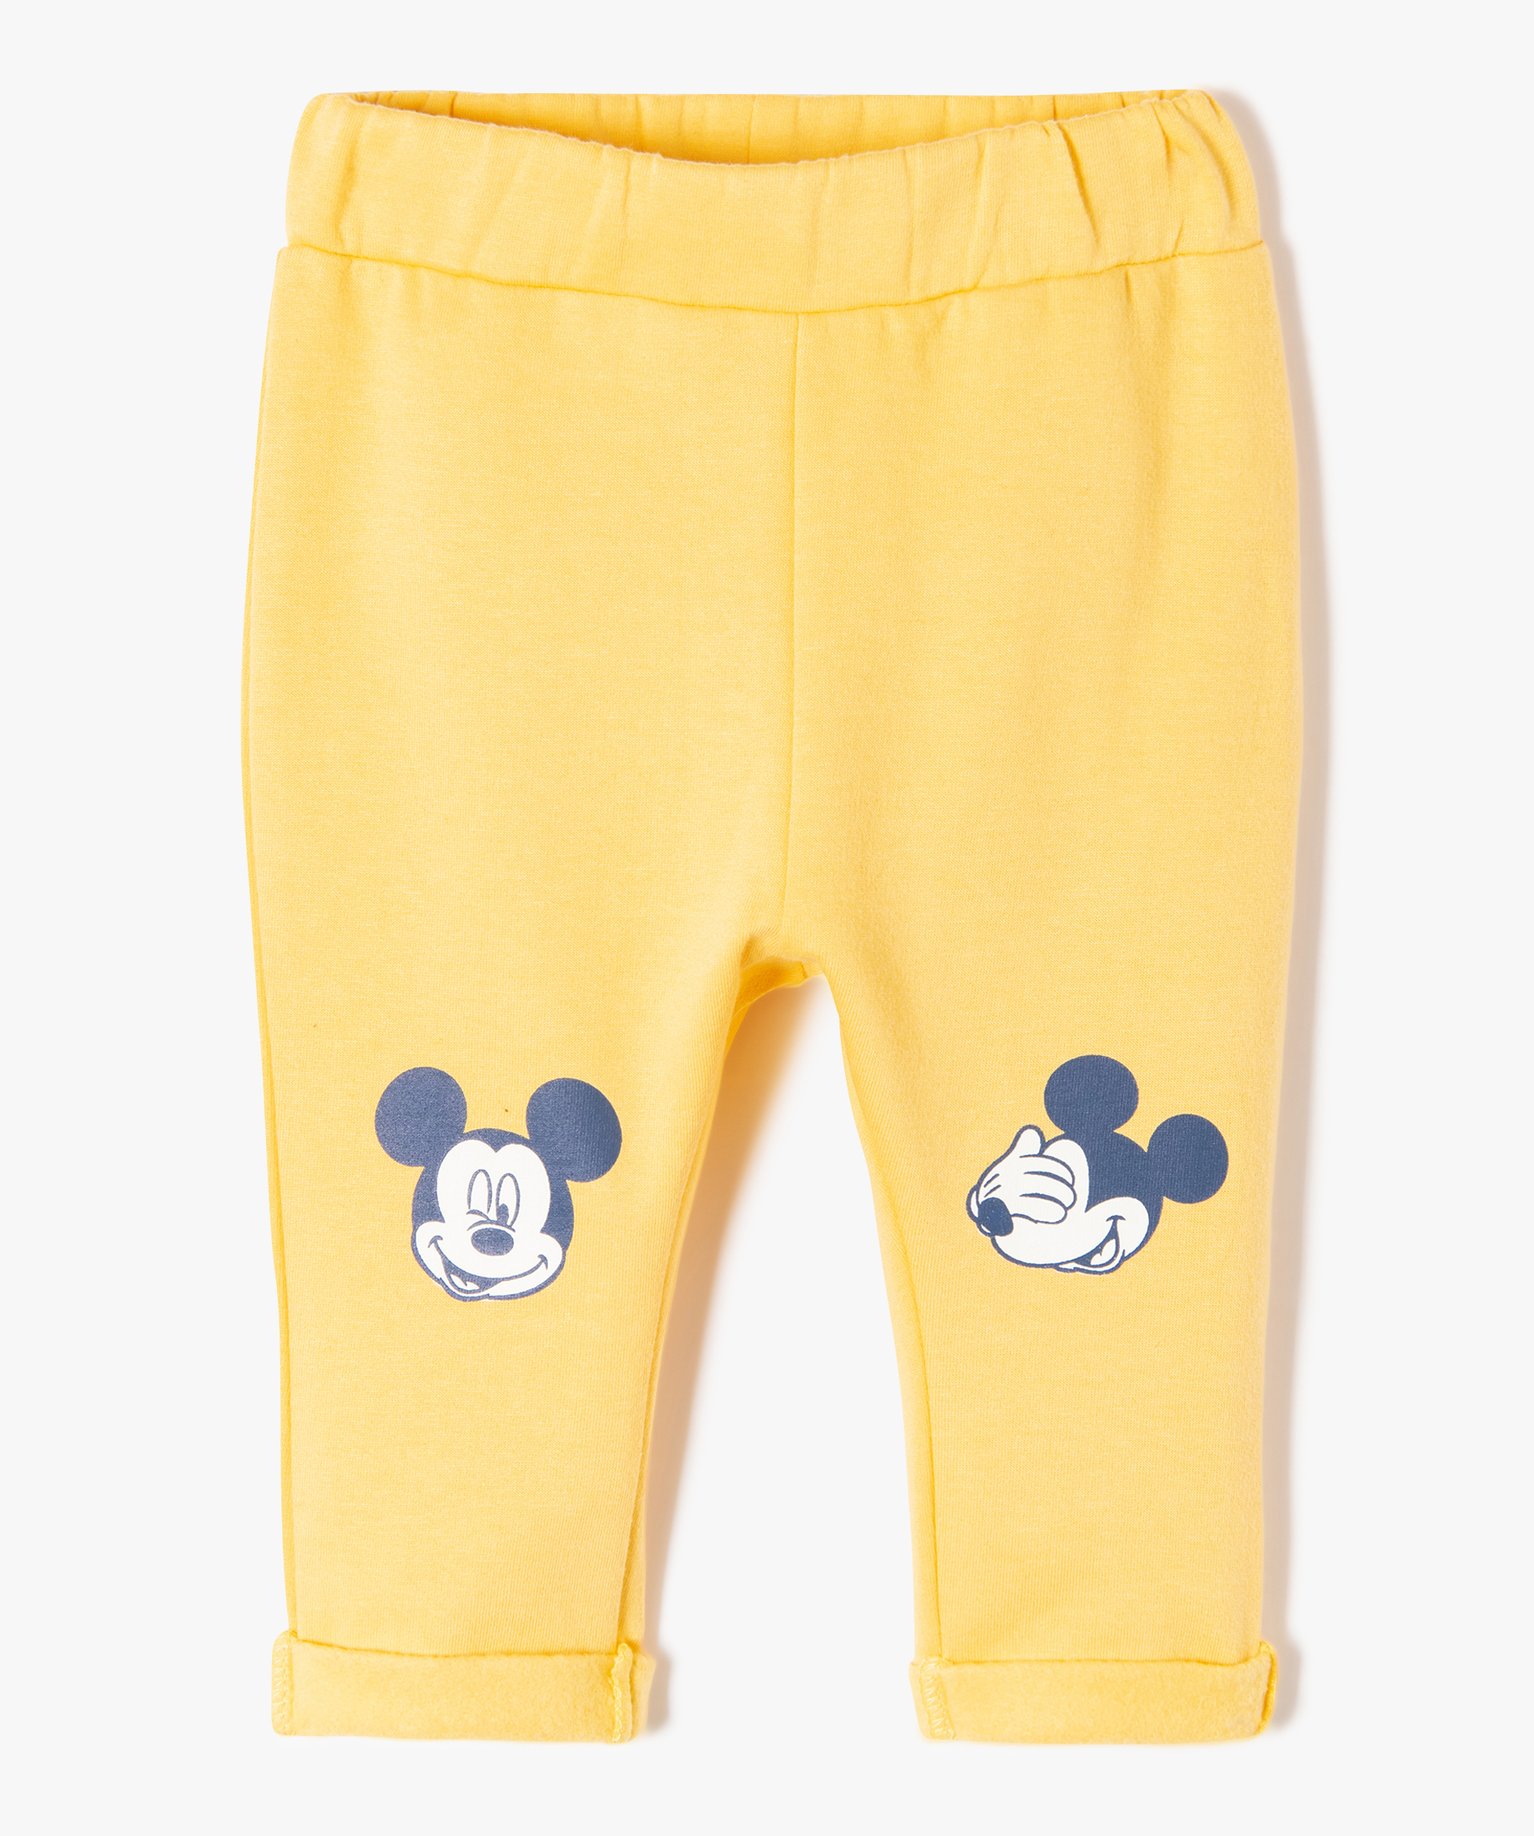 Pantalon en maille molletonnée avec motif Mickey bébé garçon - Disney - 3M - jaune - DISNEY BABY